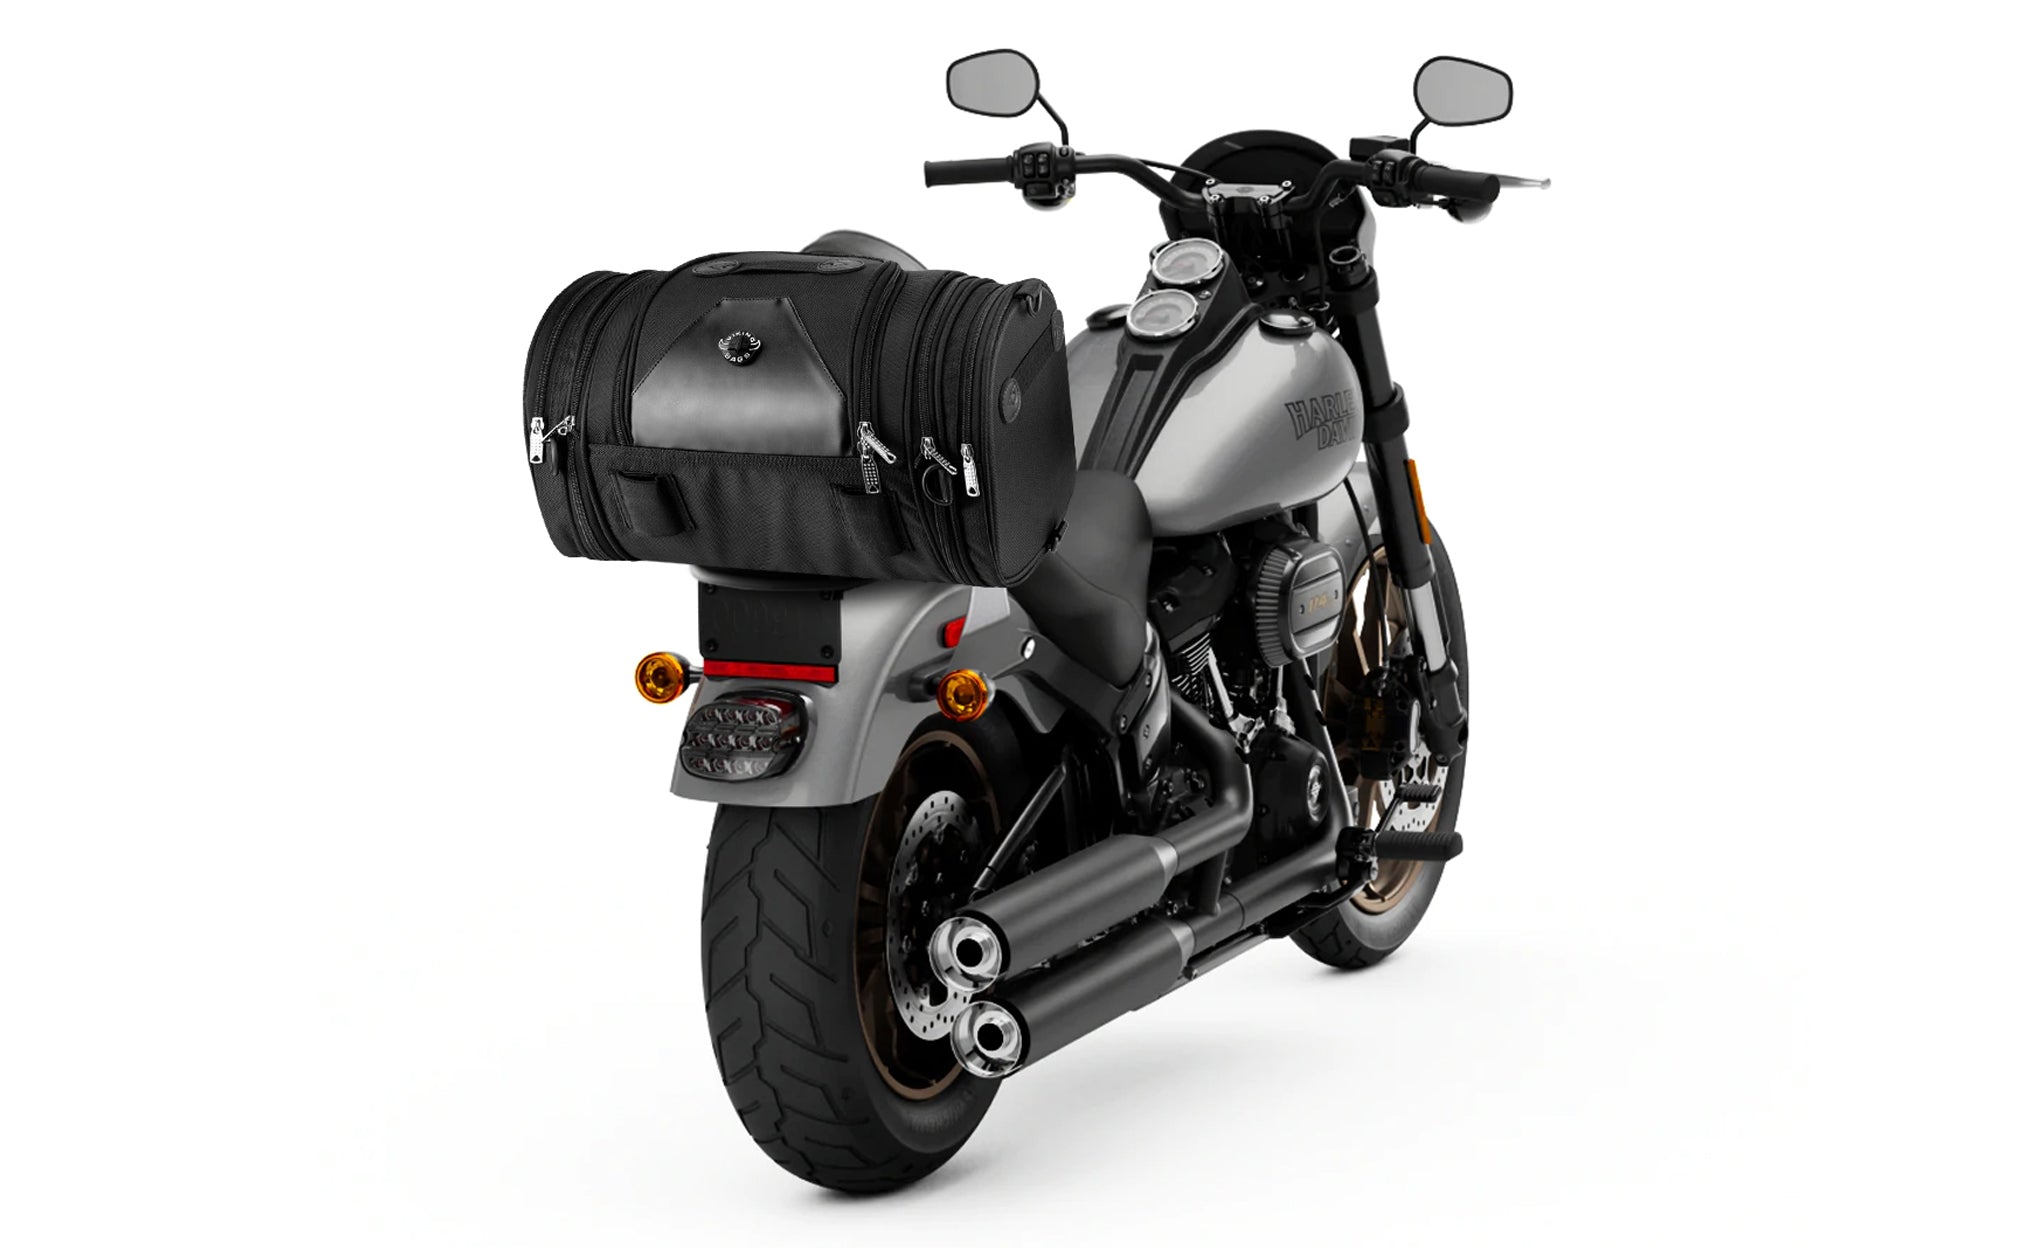 Viking Axwell Small Honda Motorcycle Tail Bag Bag on Bike View @expand